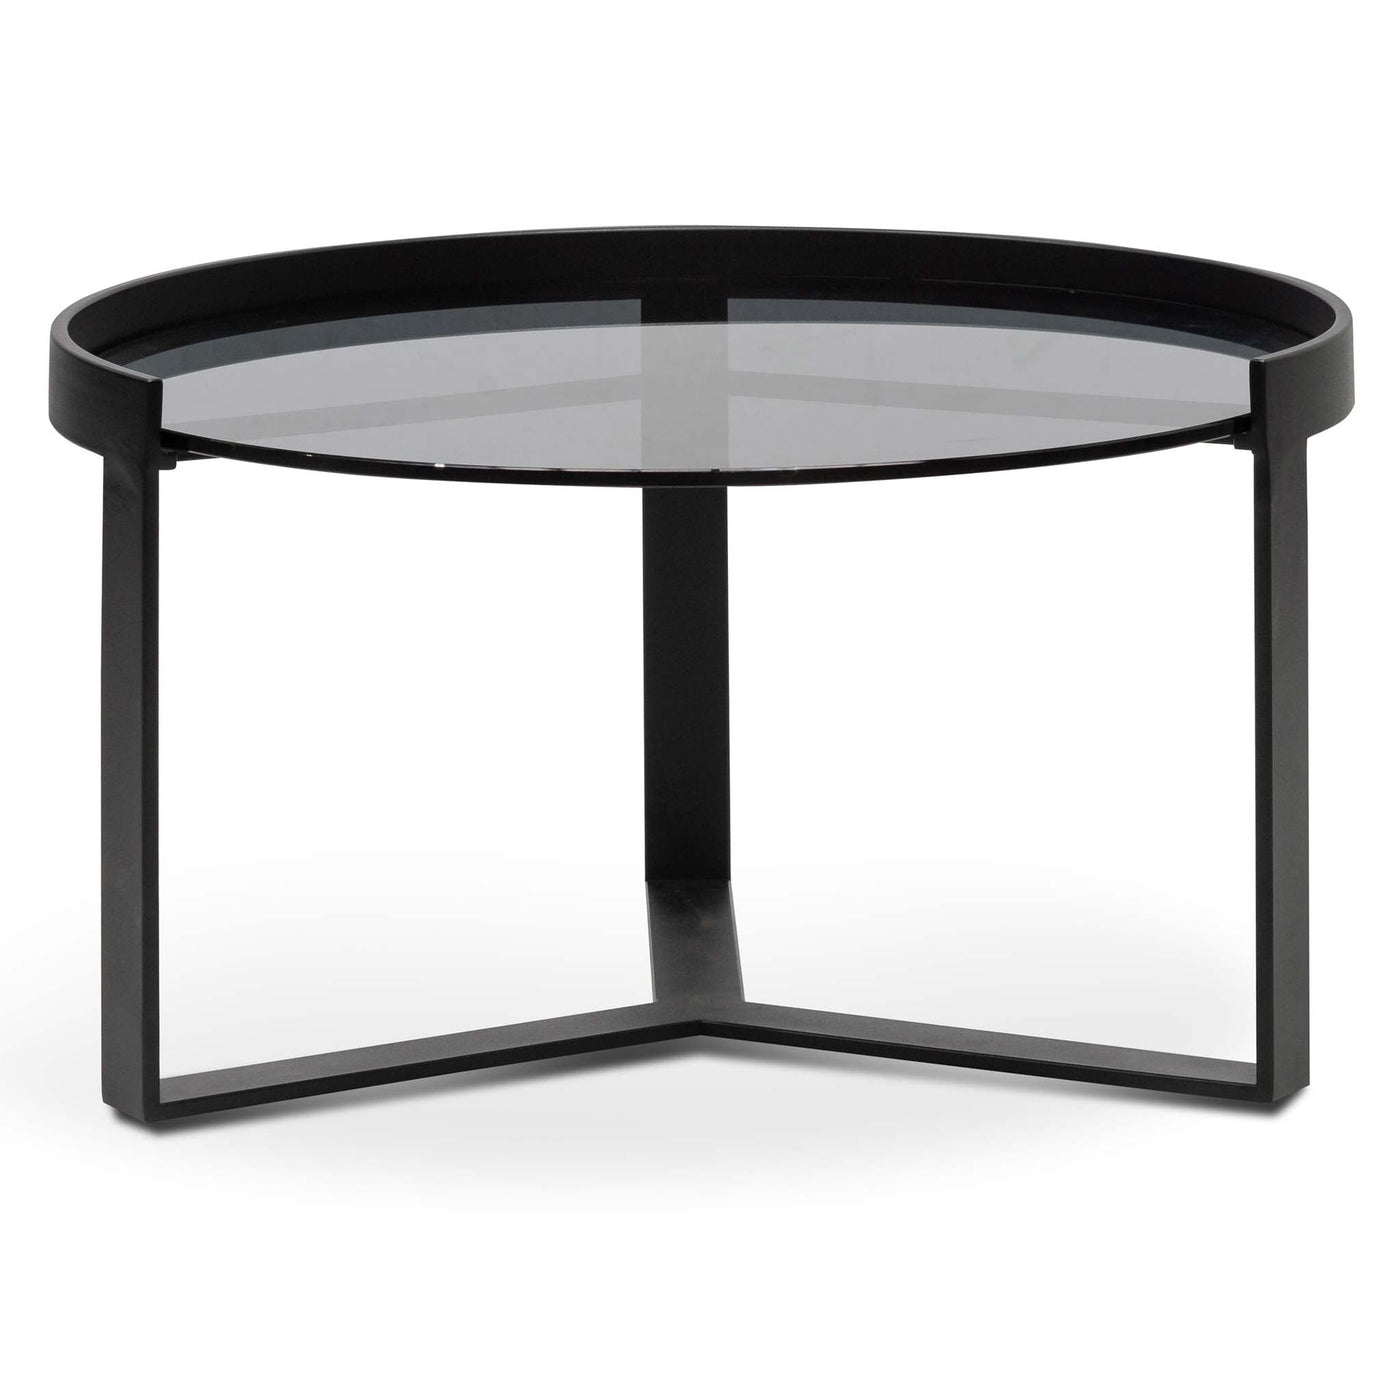 70cm Glass Coffee Table - Medium